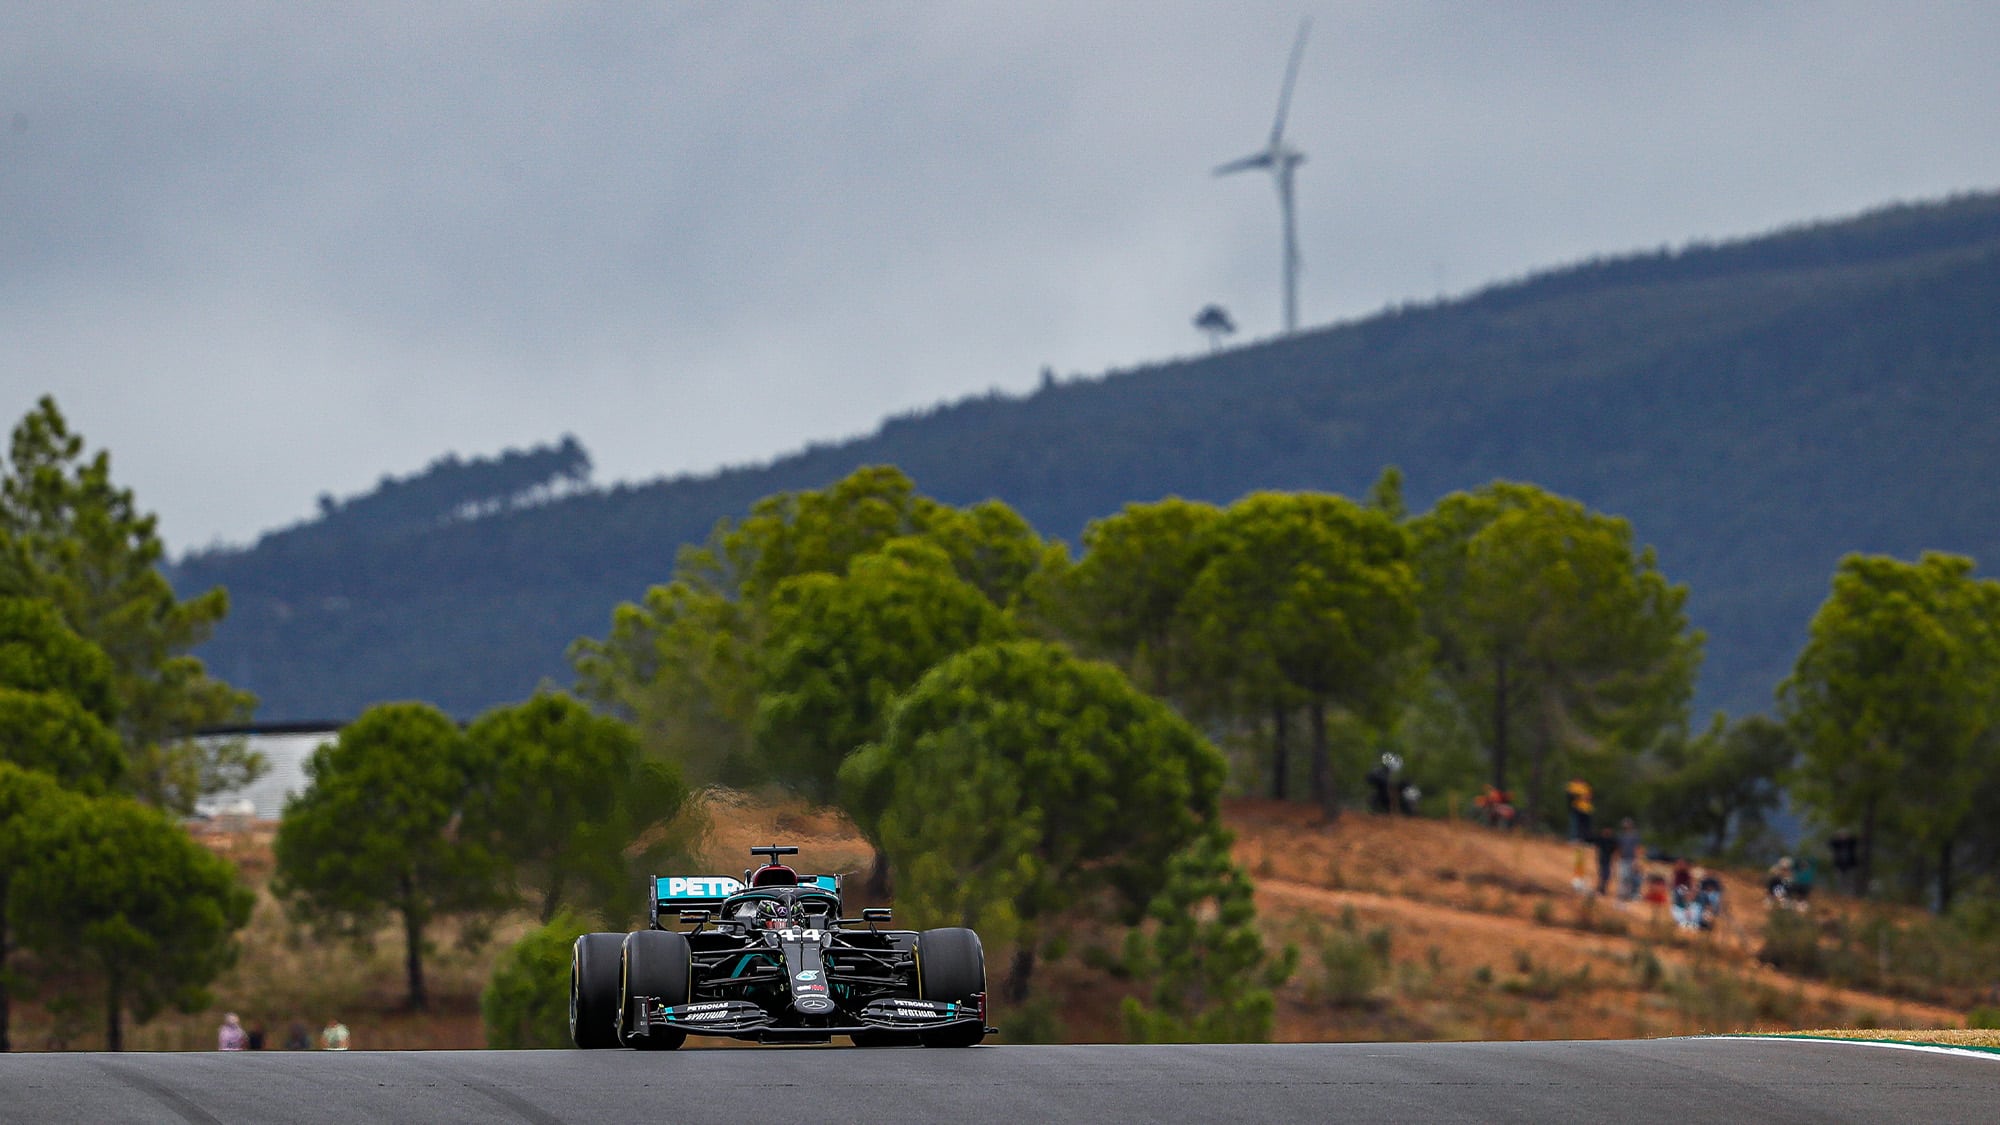 Lewis Hamilton's Mercedes on track at Portimao during the 2020 F1 Portuguese Grand Prix